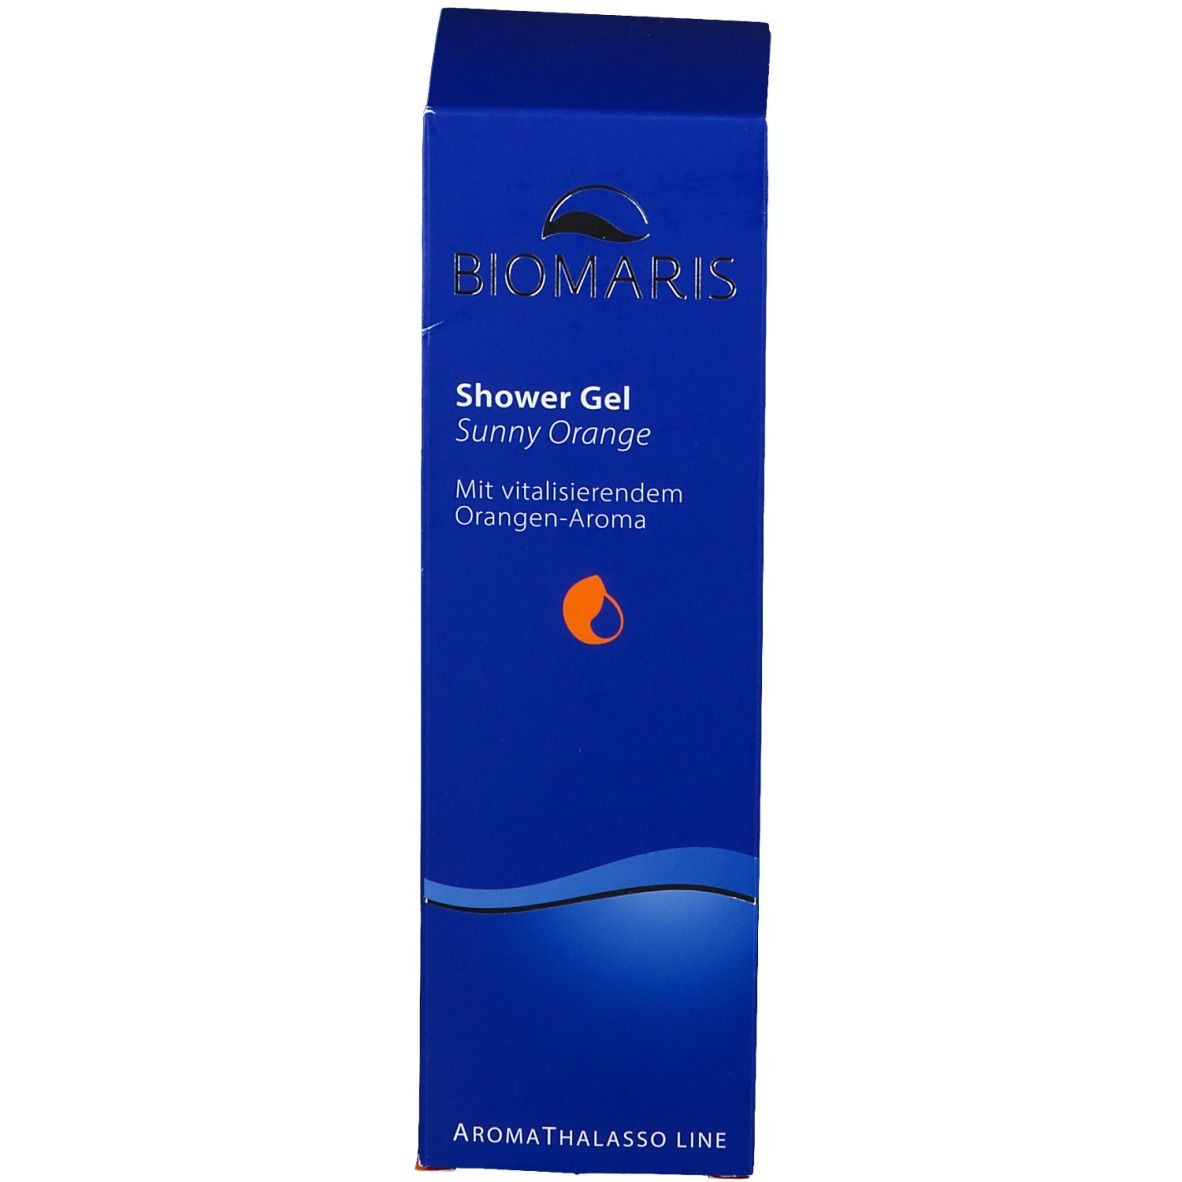 BIOMARIS® Shower Gel Sunny Orange